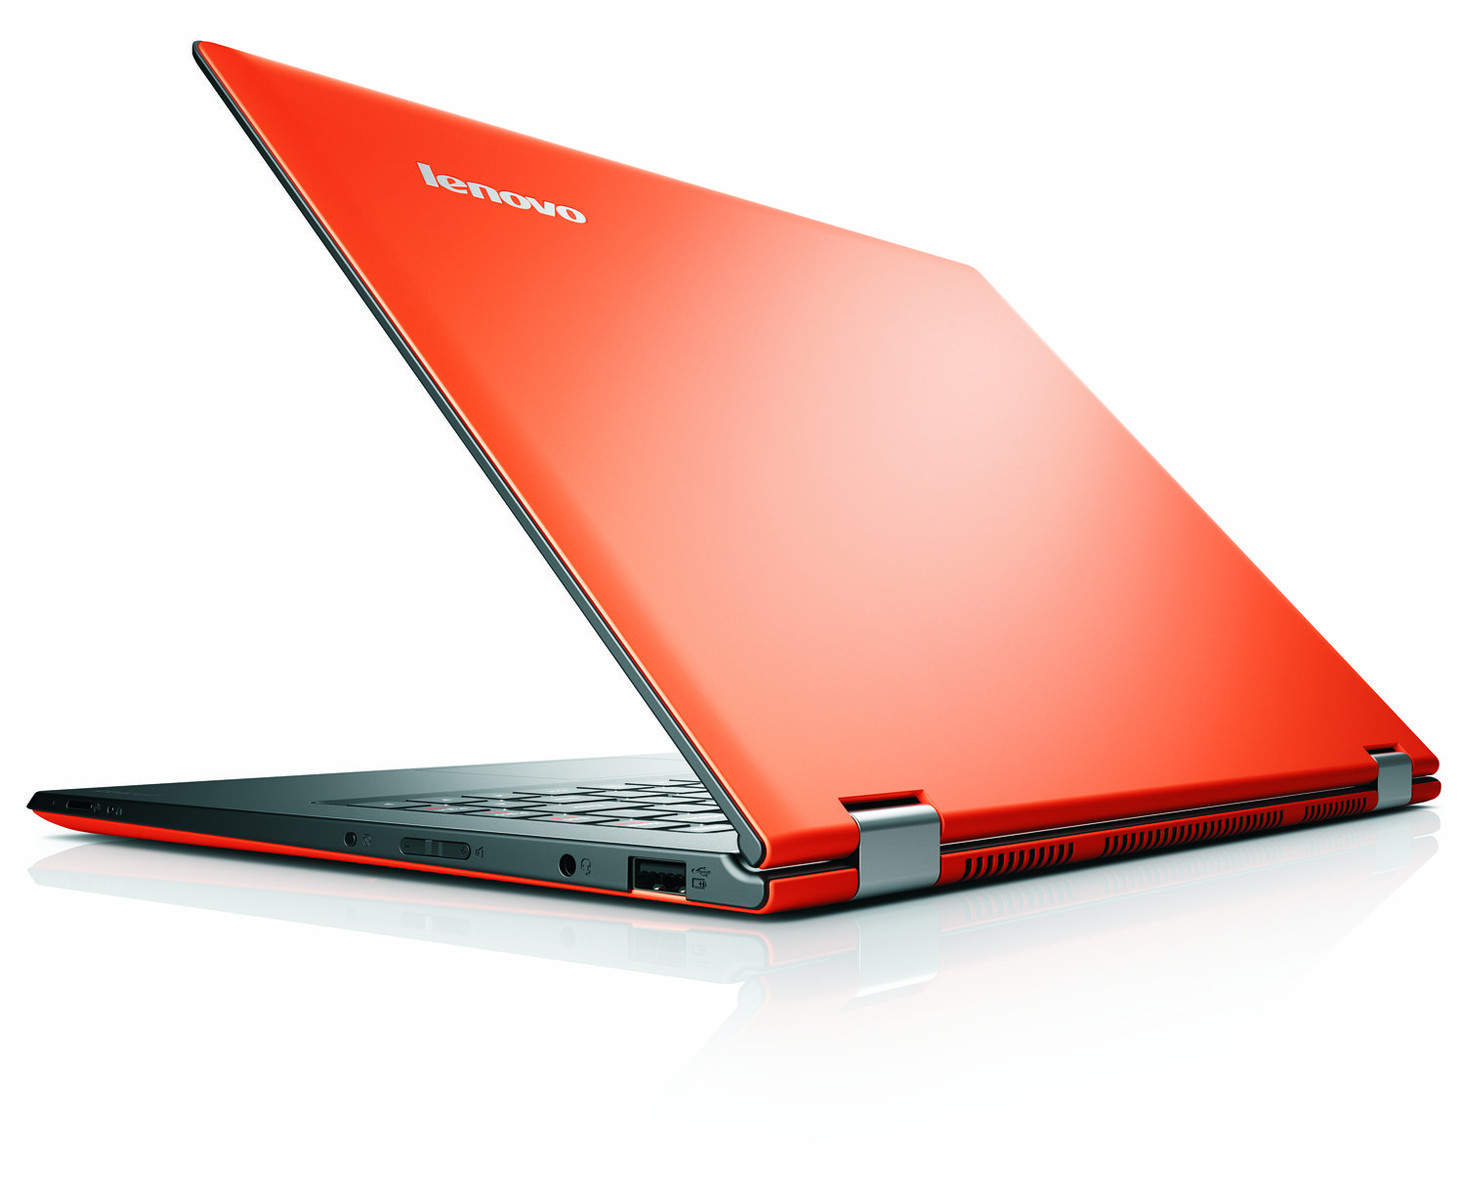 Lenovo IdeaPad Yoga 2 Pro - Notebookcheck.net External Reviews